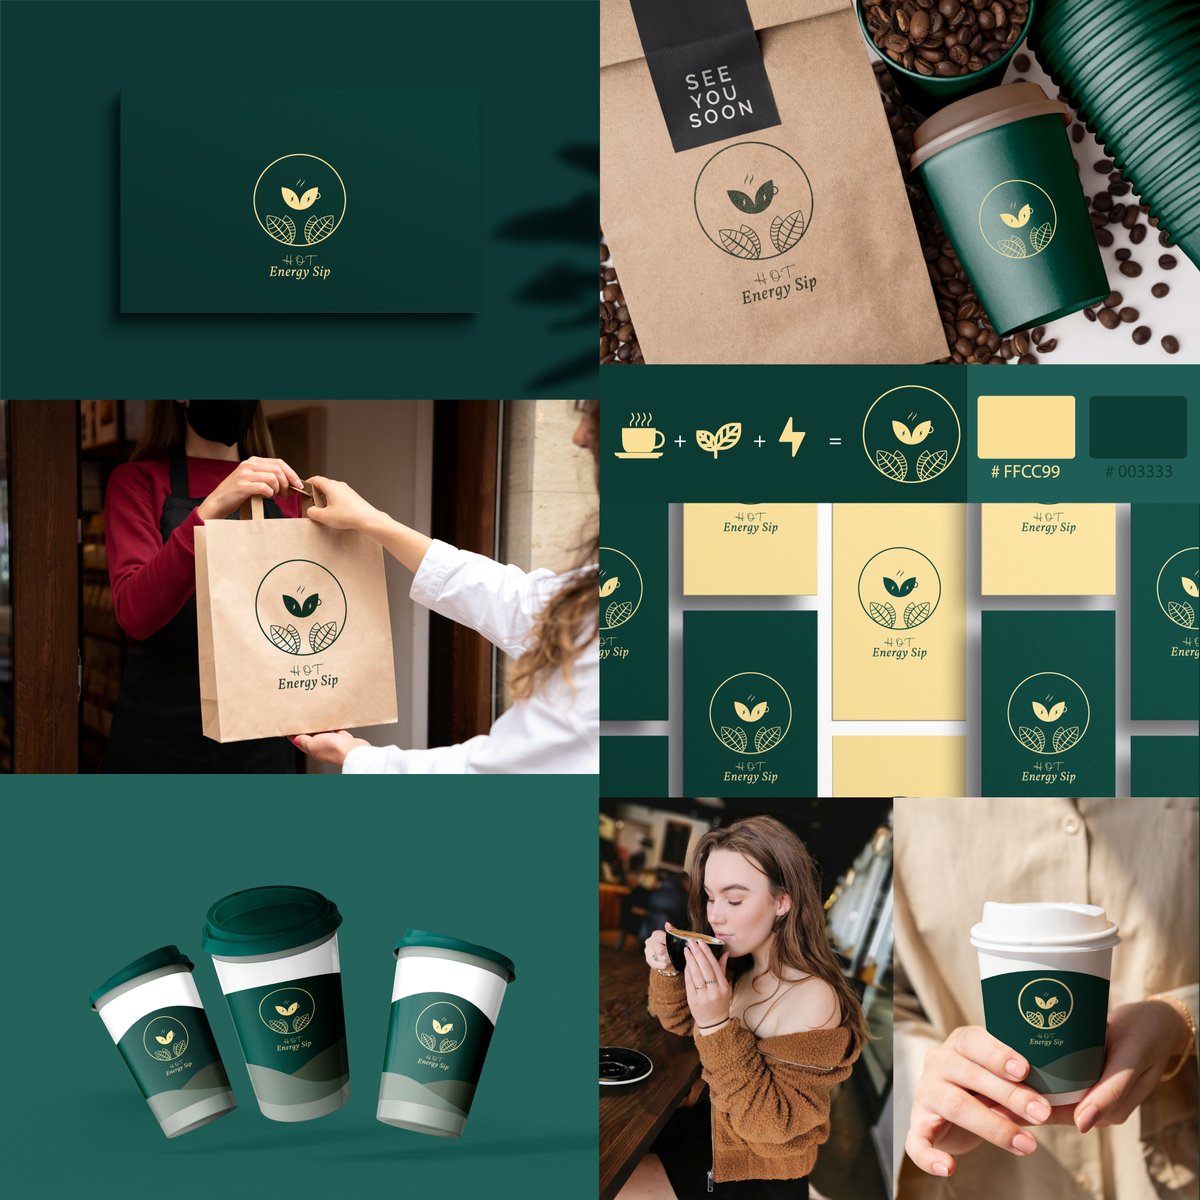 Coffee shop, cafe, cafe branding, logo & brand identity 

#branddesign #logos #logotype #visualidentity #logodesign #companybranding #coffeeshop #cafelogo #cafe #branding #logo #graphicdesign #brandidentity #Graphic #business